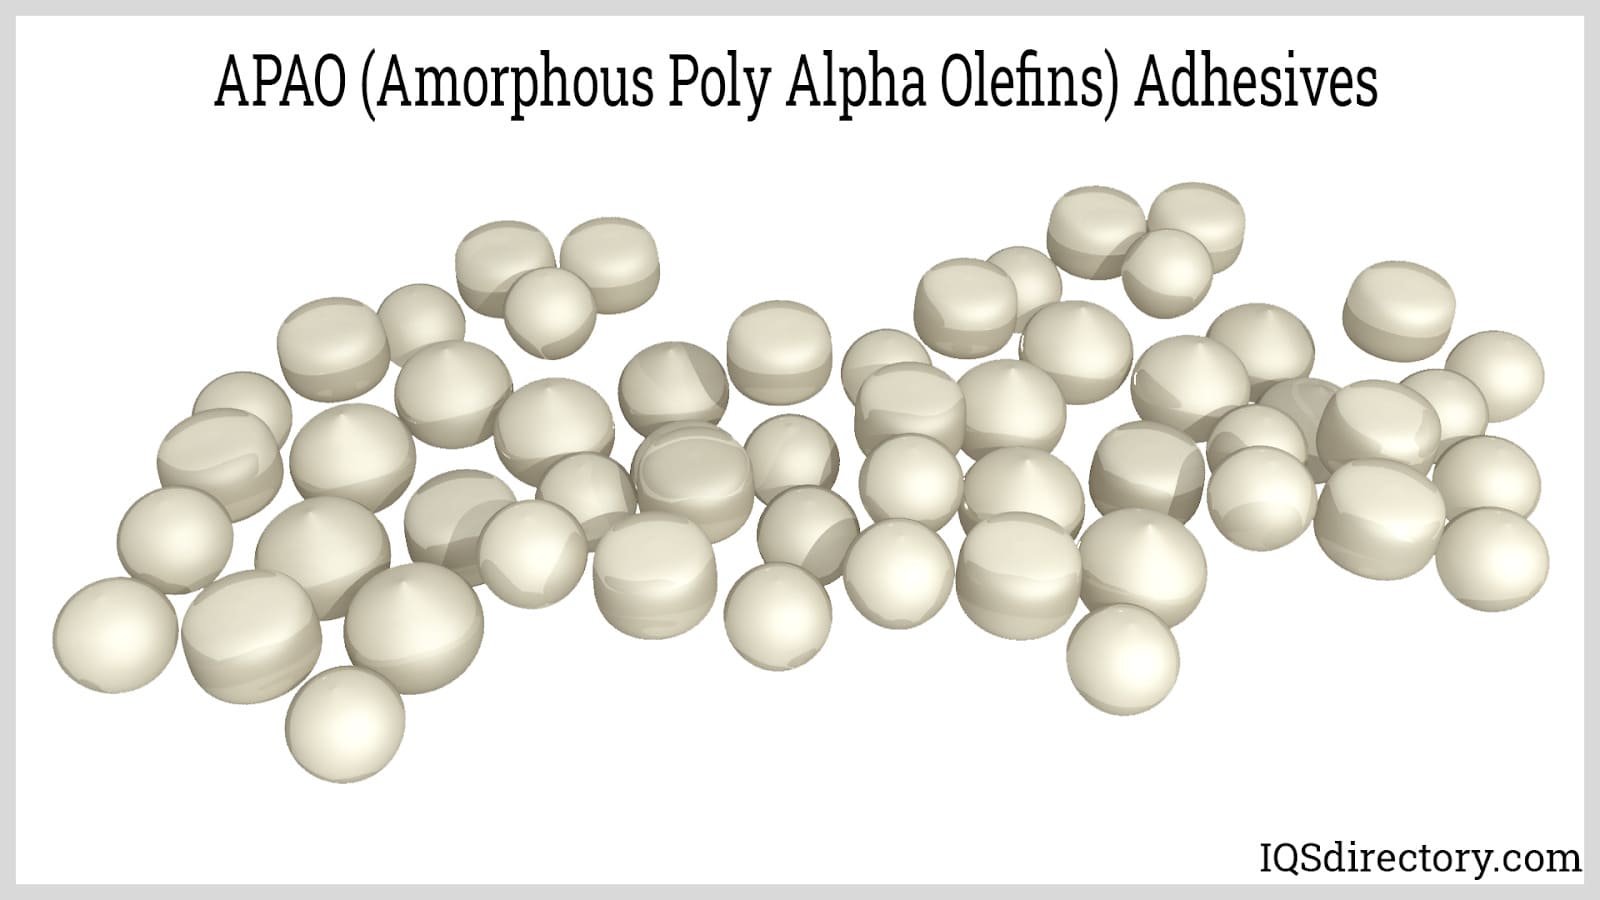 APAO (Amorphous Poly Alpha Olefins) Adhesives